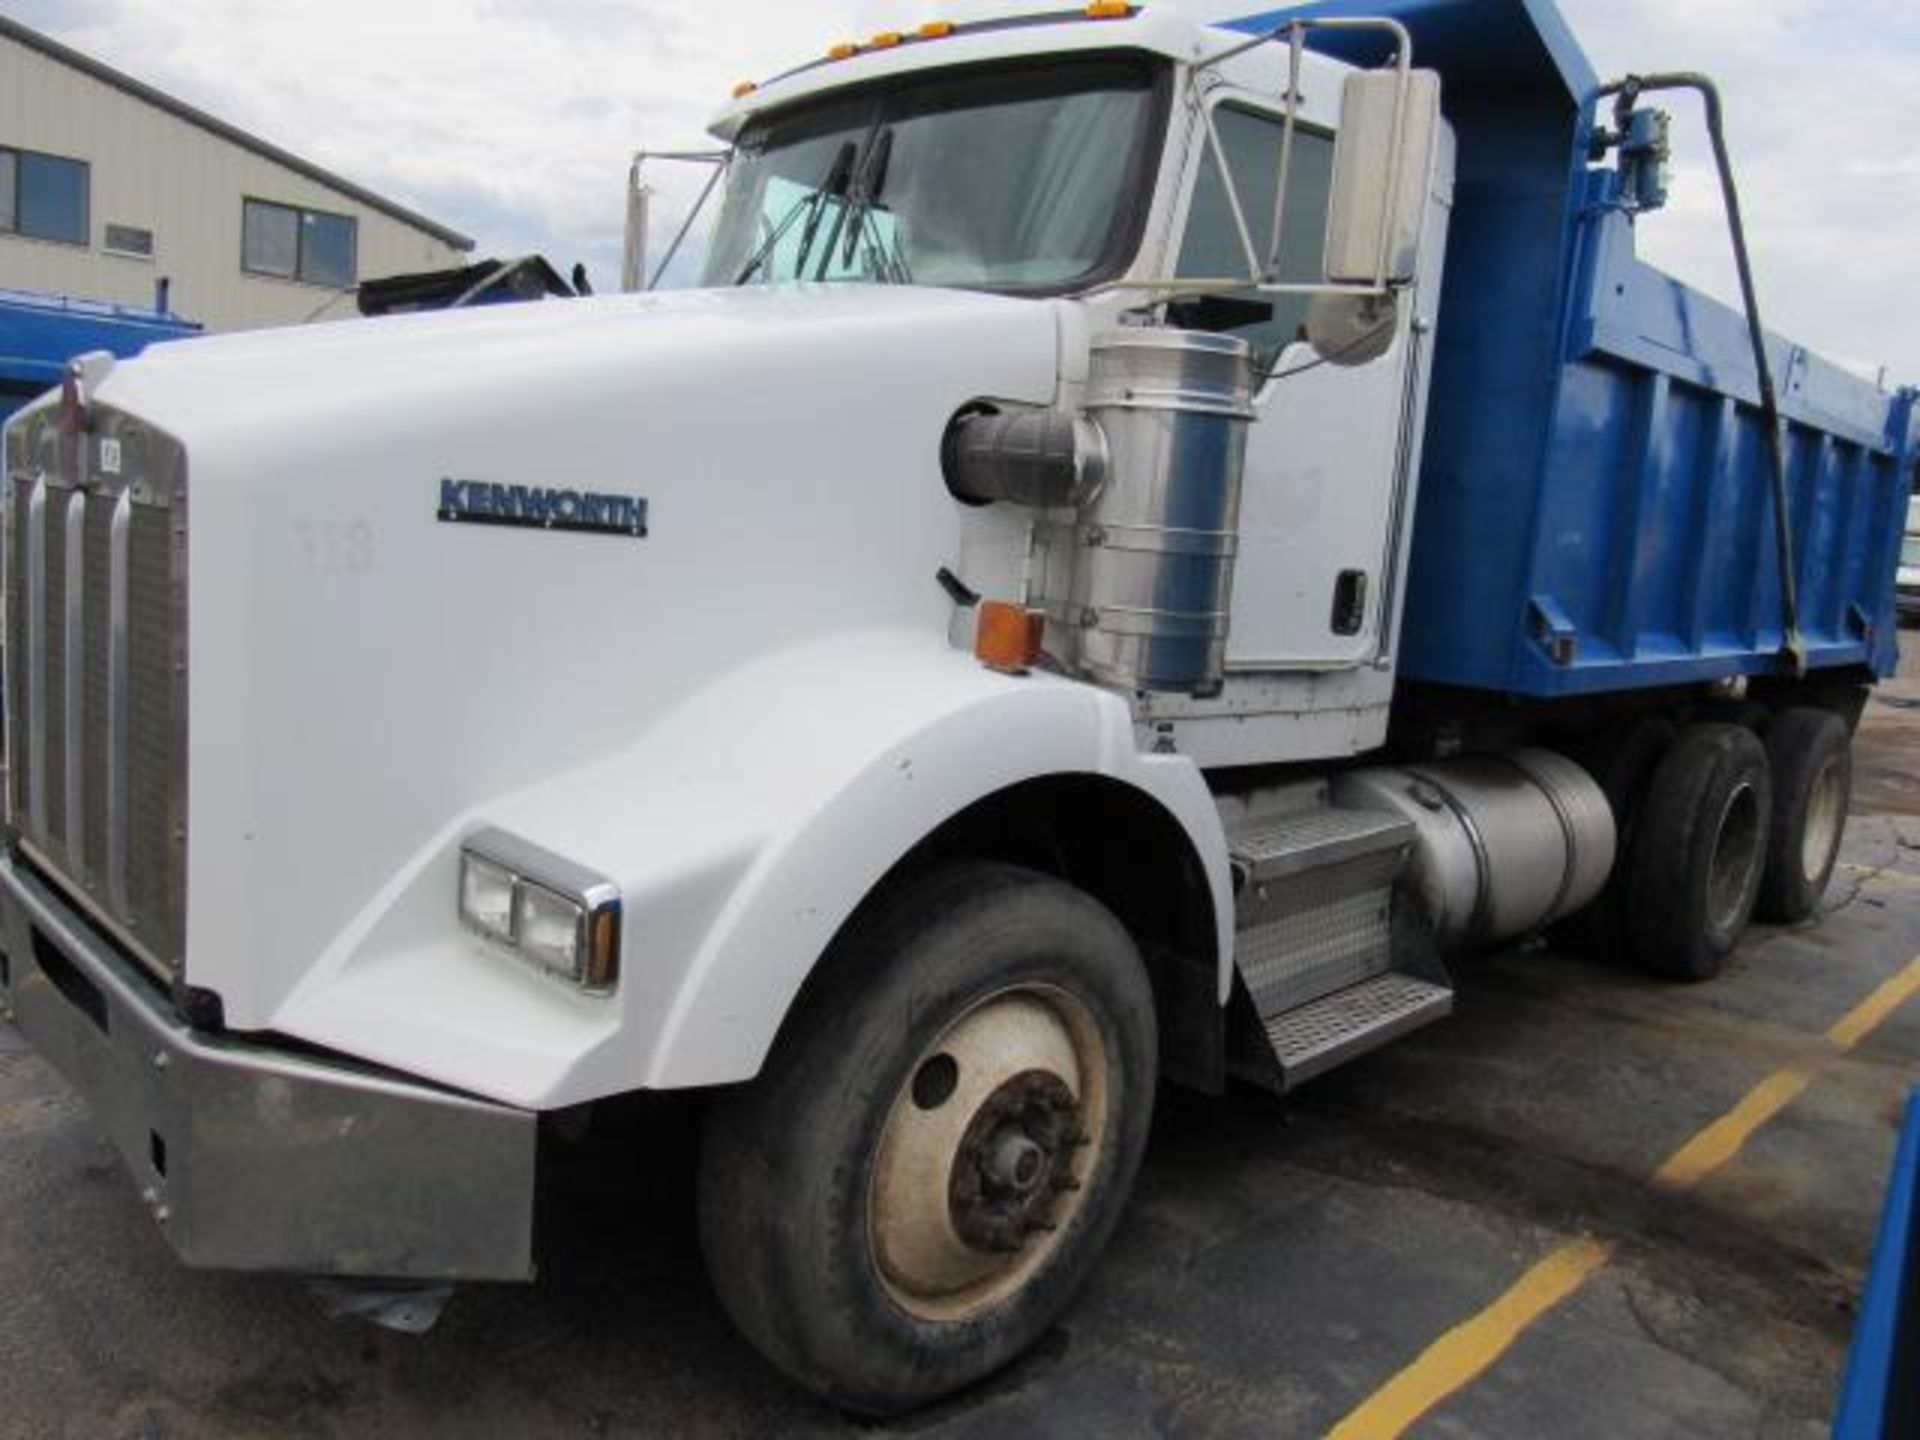 2008 Kenworth T800 Dump Truck, VIN # 1NKDLU9X58J234087, Caterpillar C13 Acert Turbo Diesel Engine,